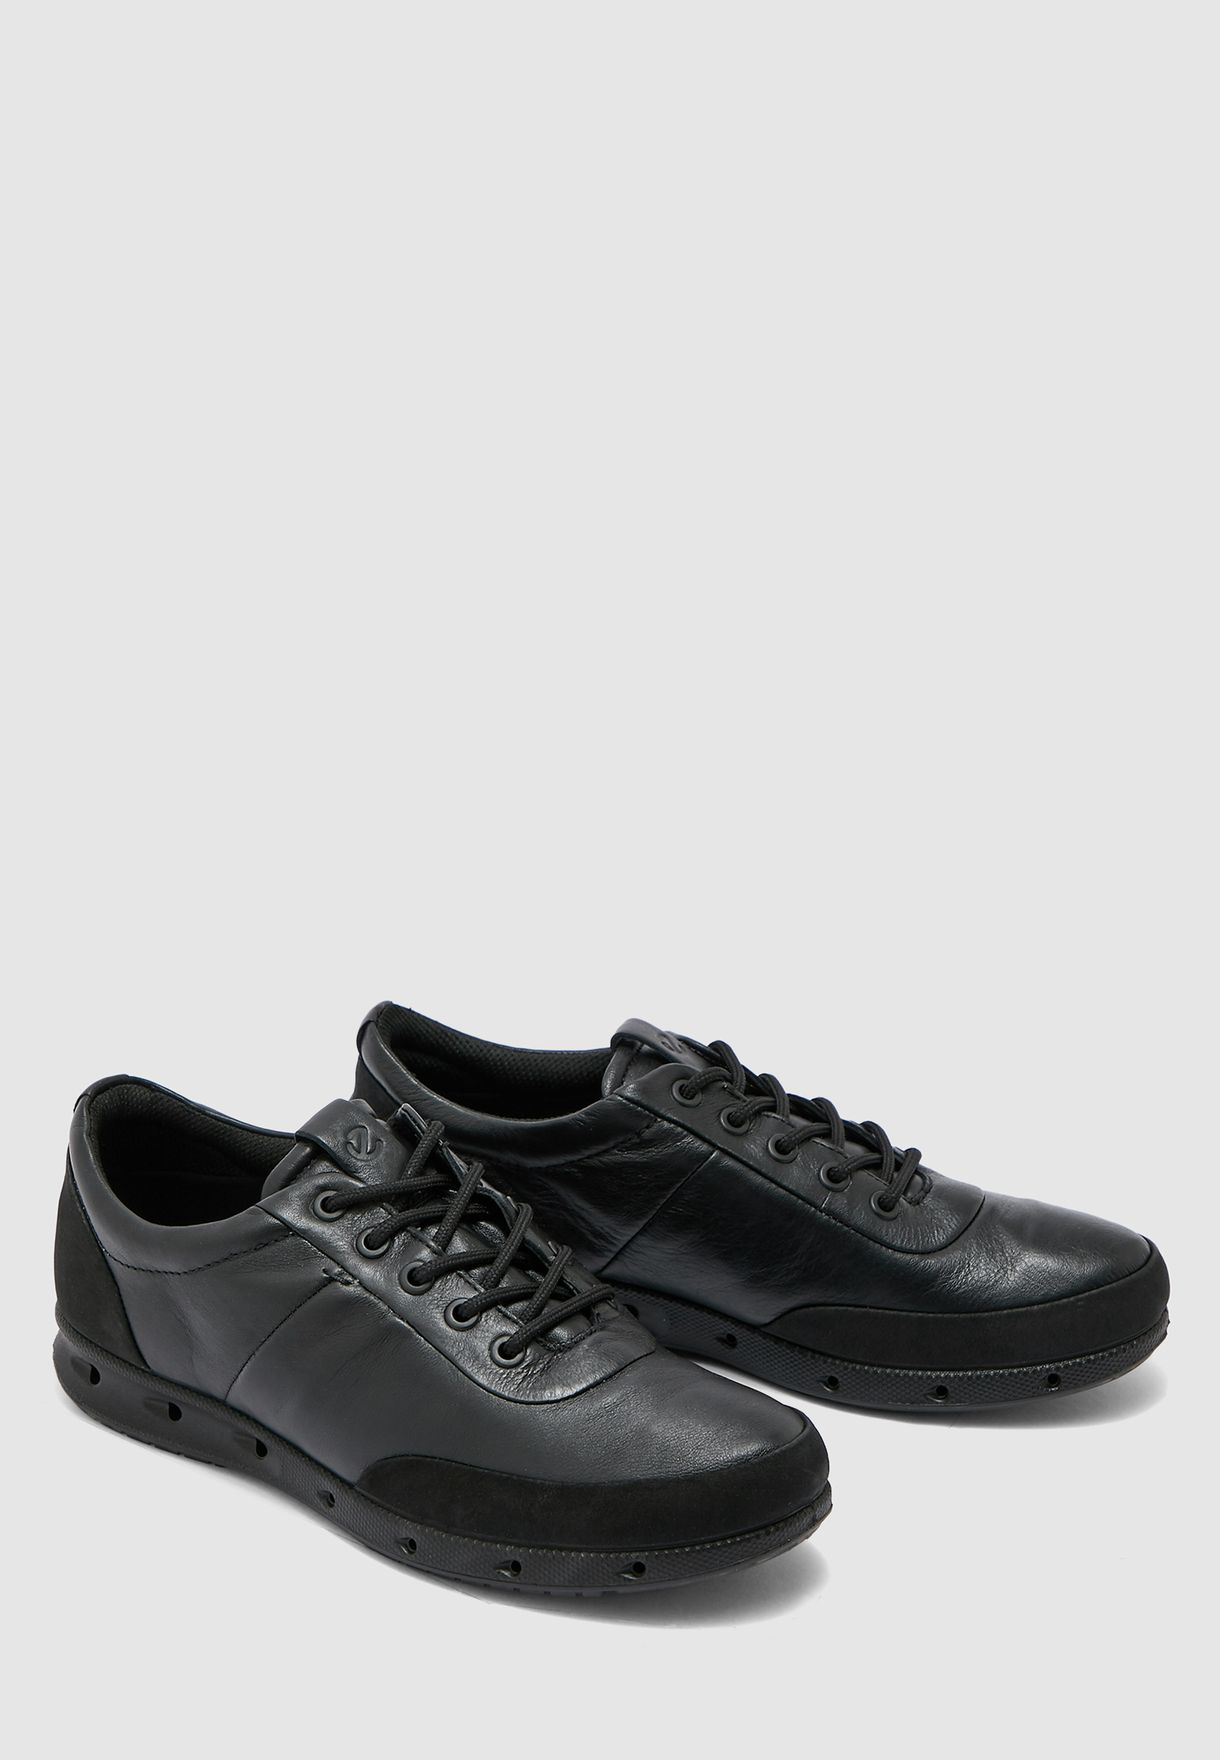 ecco black leather sneakers